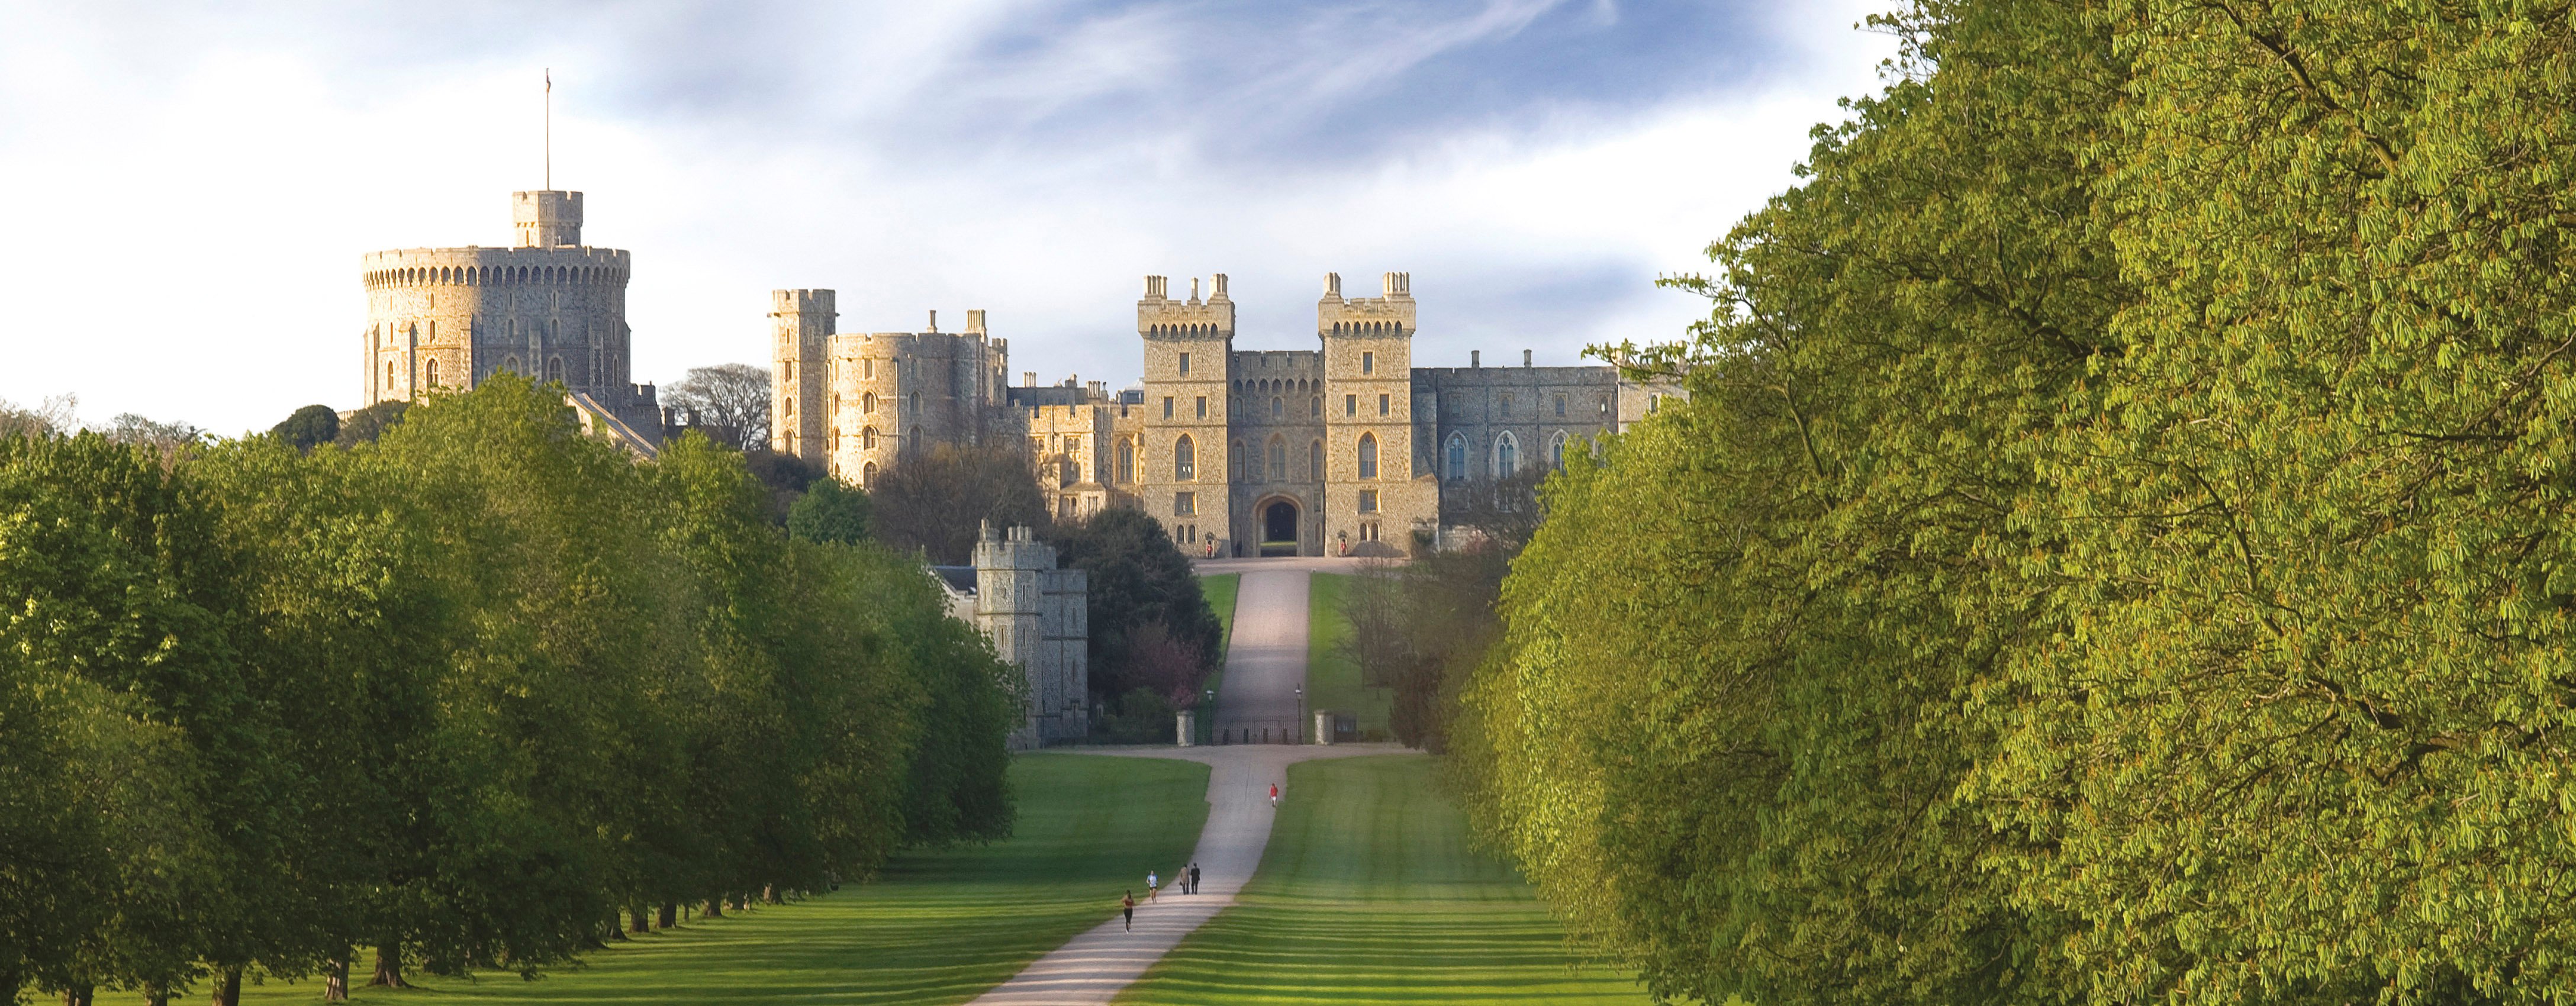 The long walk to Windsor Castle